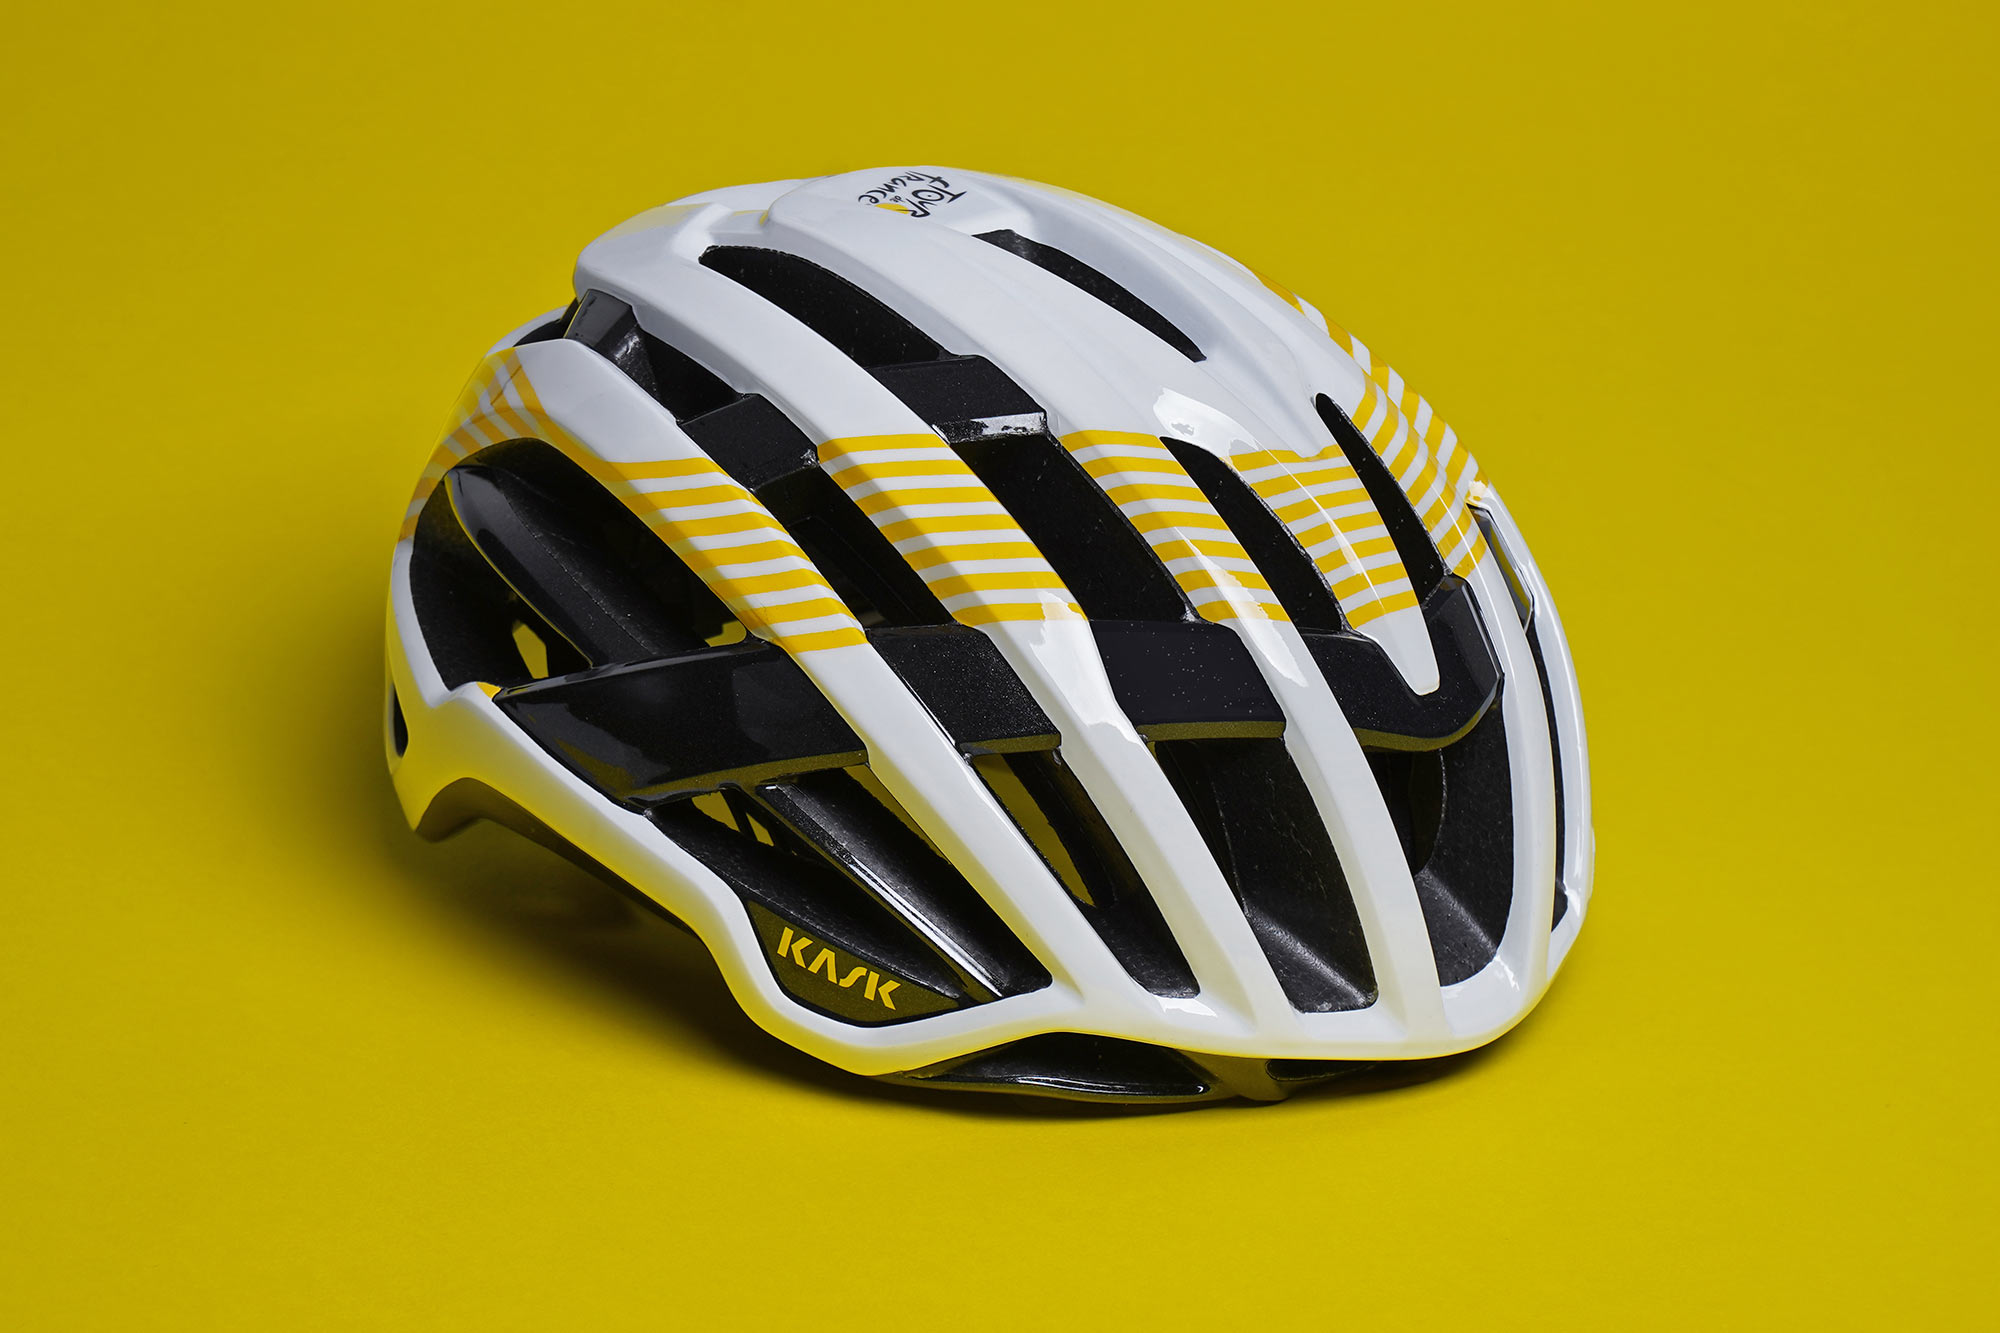 Kask Valegro Tour de France limited edition lightweight vented road bike helmet